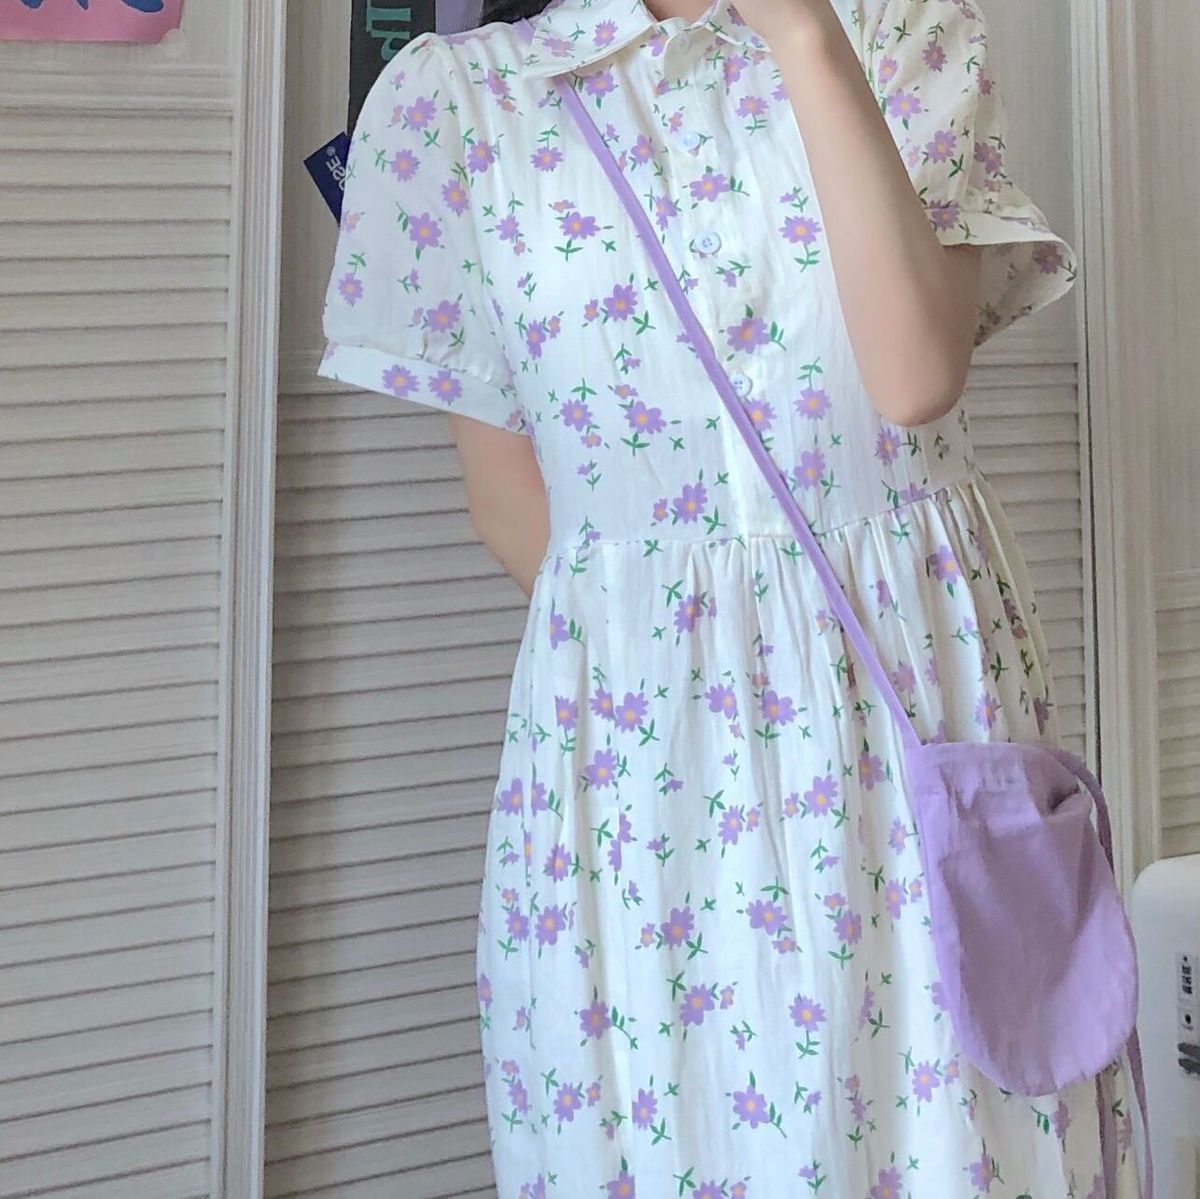 [Mã FACBGO245 giảm 10K đơn bất kì] Loose and Thin Floral Dress Female Summer Doll Dress Sweet Short Sleeve Skirt